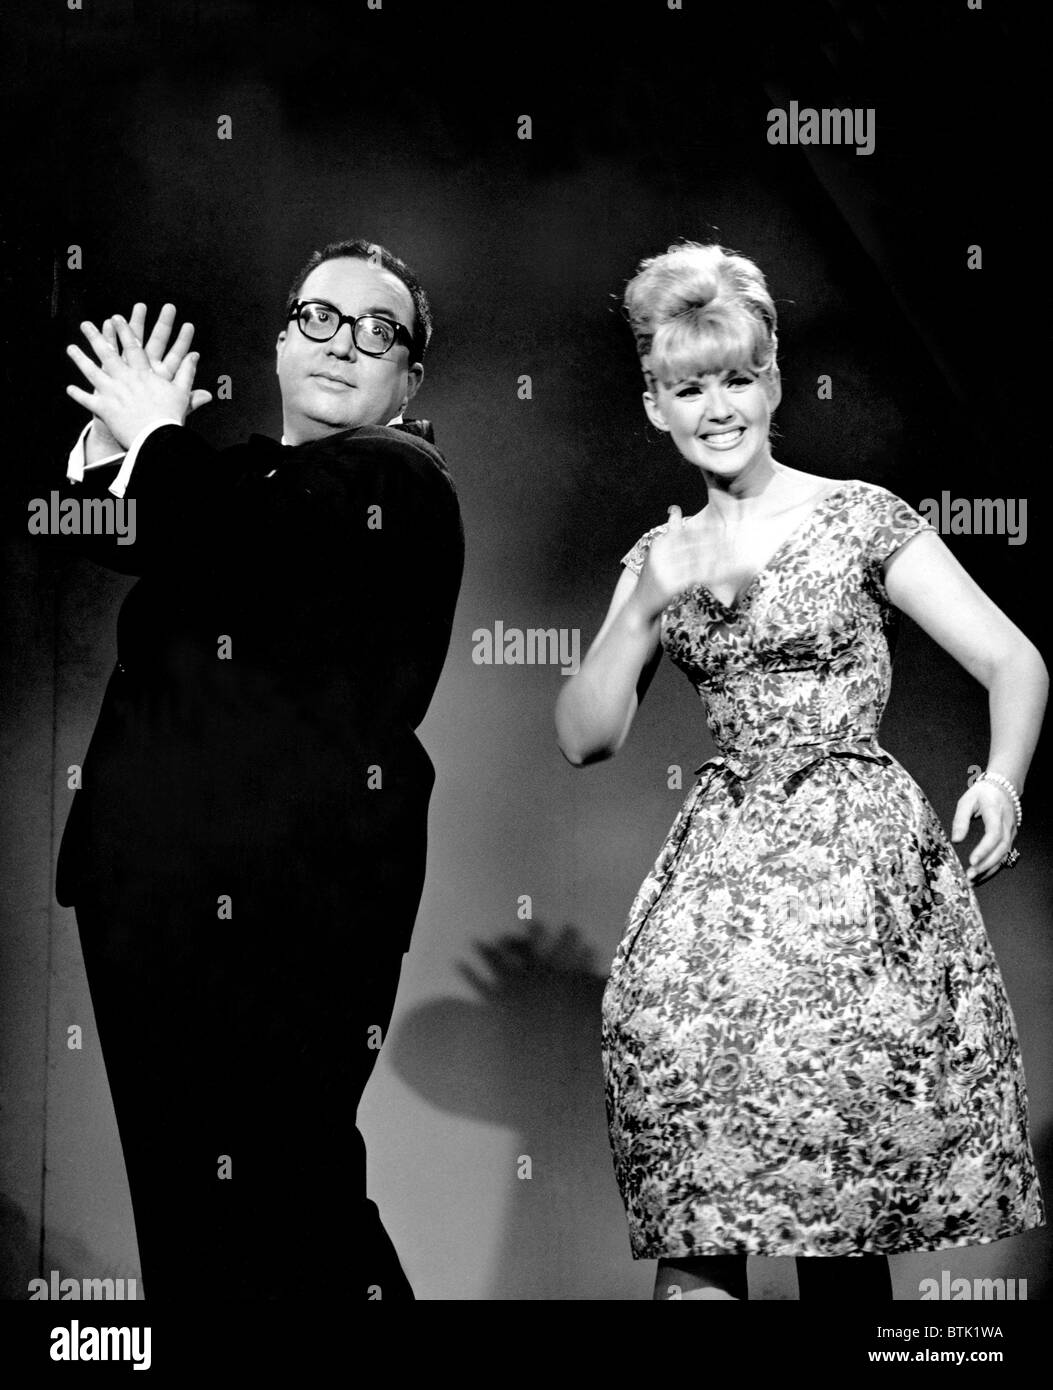 STUMP THE STARS, Allan Sherman, Connie Stevens (17.06.63 ausgestrahlt), 1962 / 63 Stockfoto